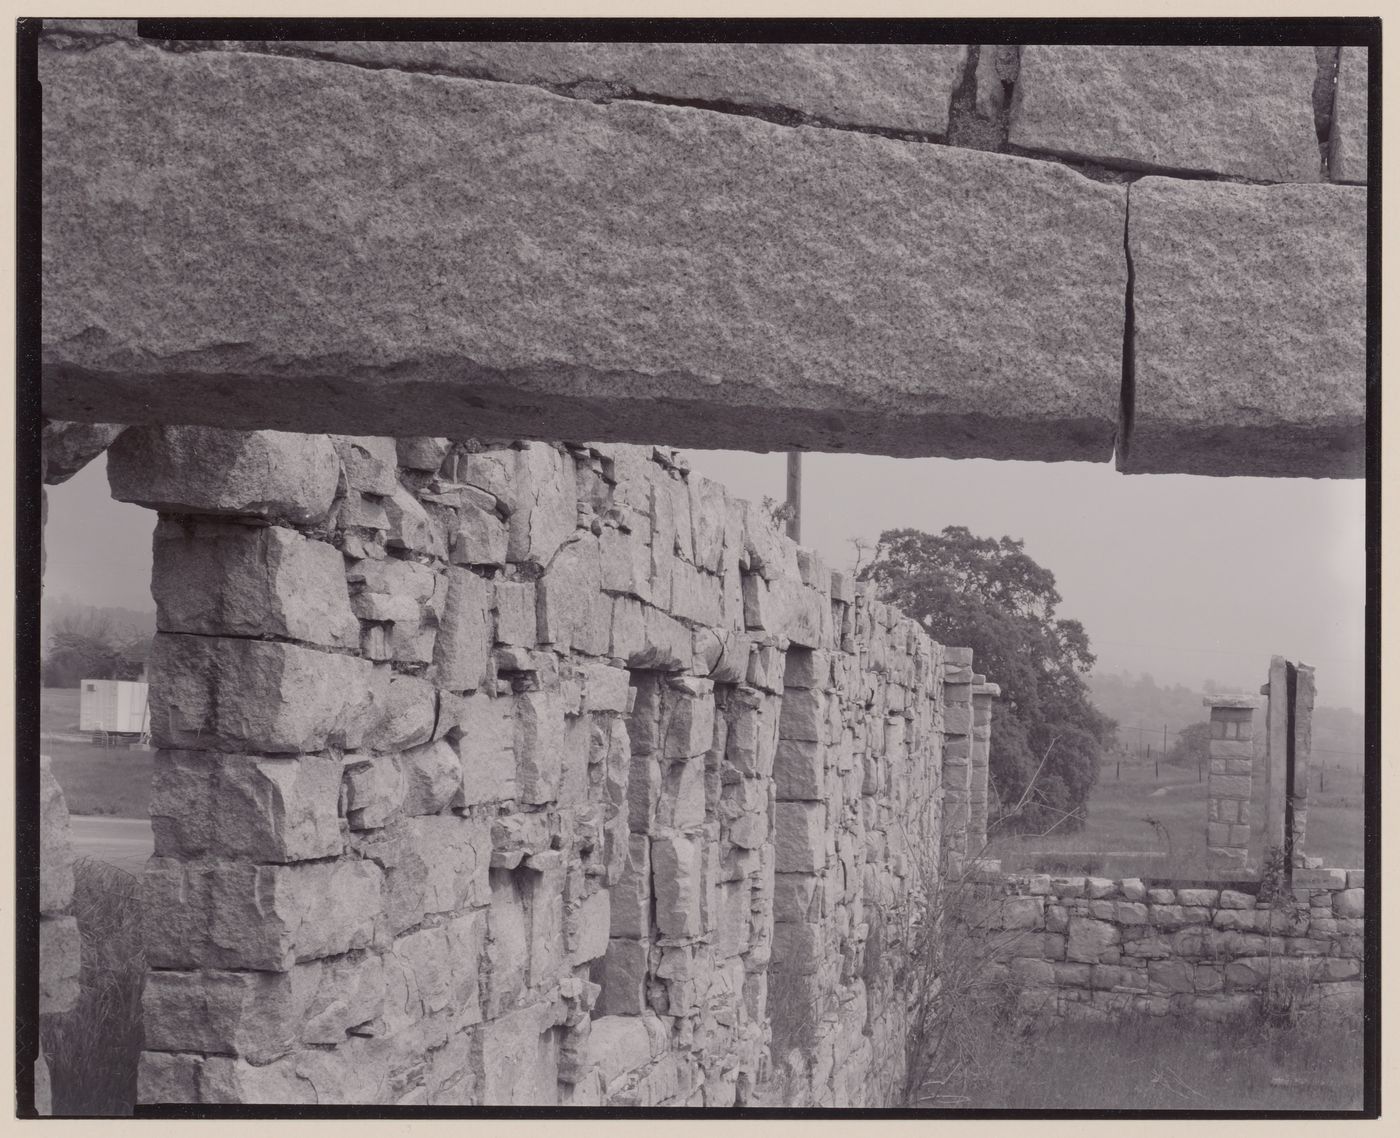 Ruined granite block walls and posts in field, Raymond, California